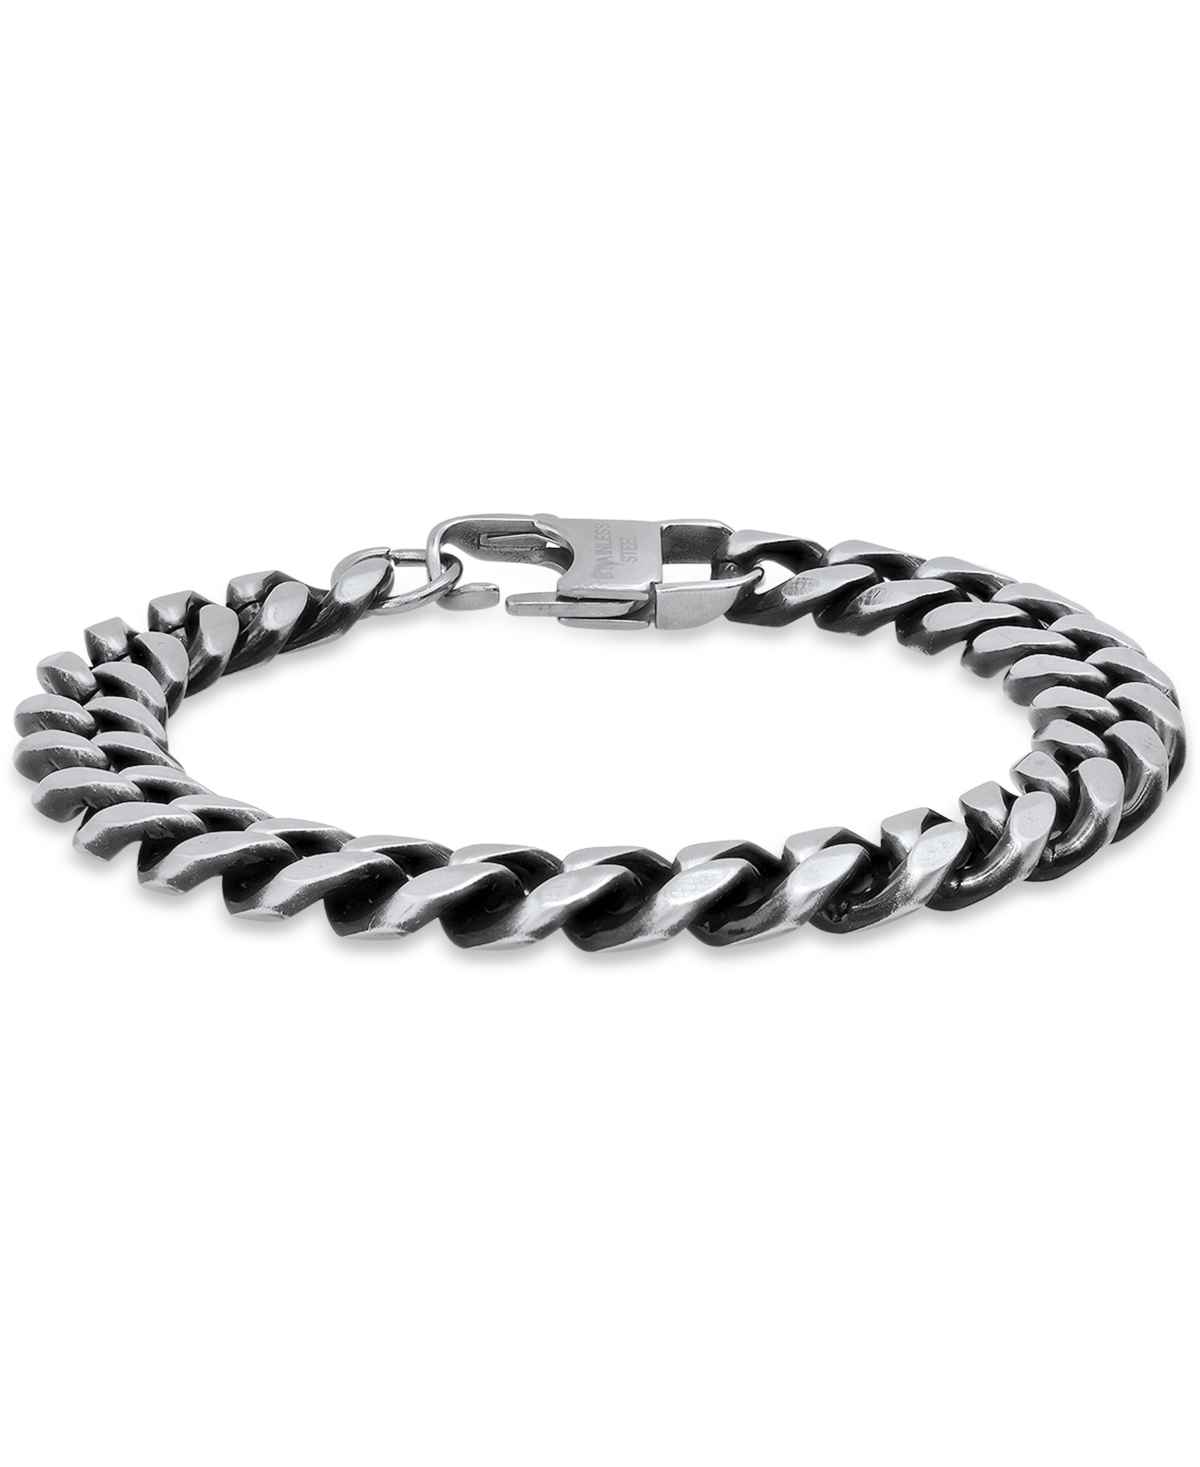 Steeltime Men's Gunmetal-tone Stainless Steel Cuban Link Chain Bracelet